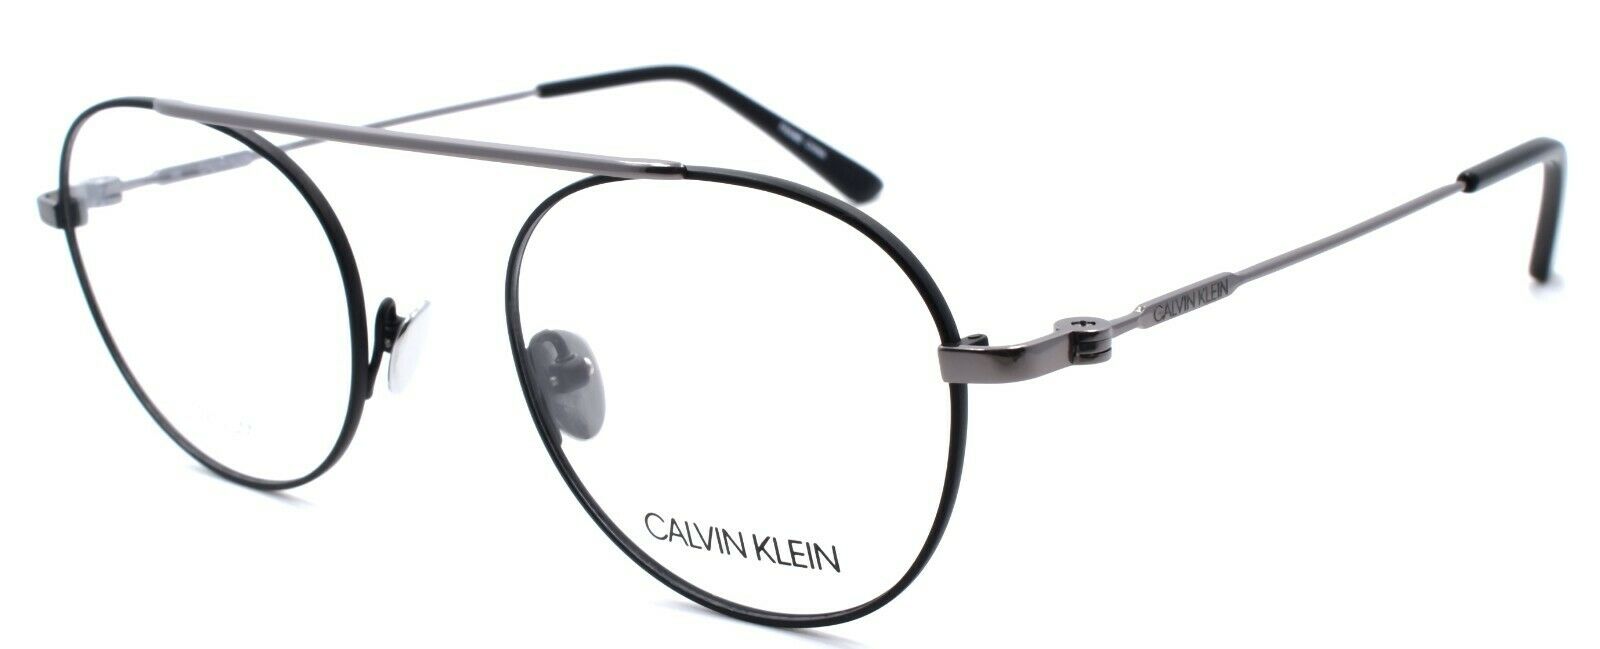 1-Calvin Klein C19151 001 Men's Eyeglasses Frames Titanium 50-20-145 Matte Black-883901121698-IKSpecs